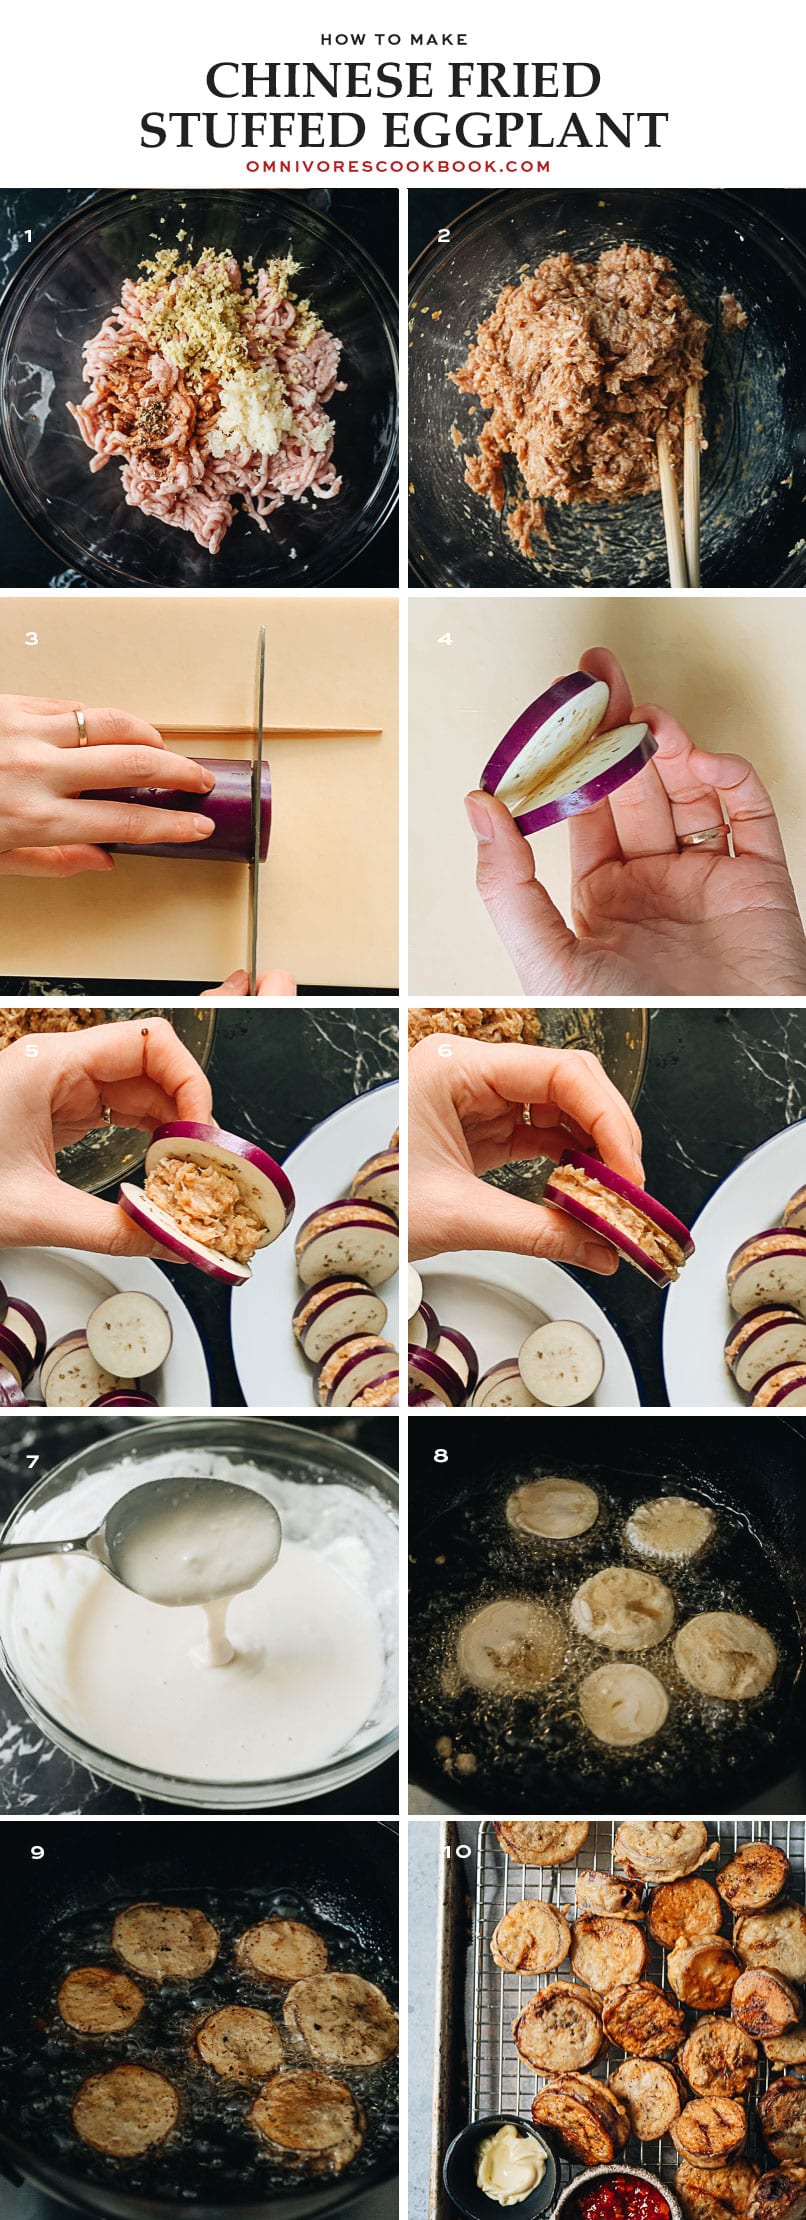 How to make fried stuffed eggplant step-by-step